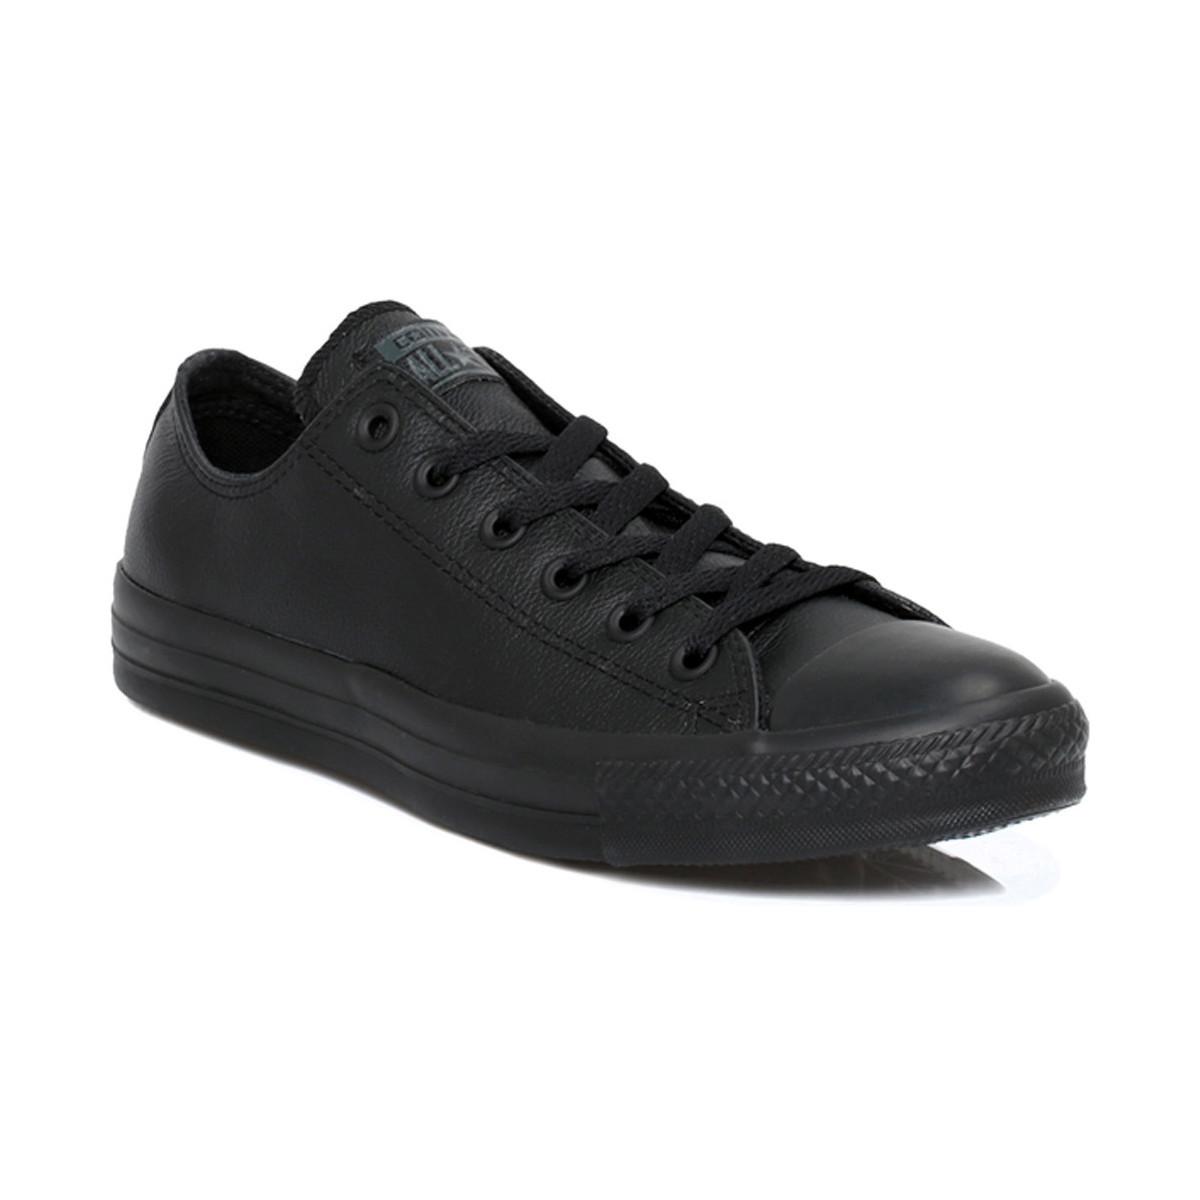 mens black leather converse shoes